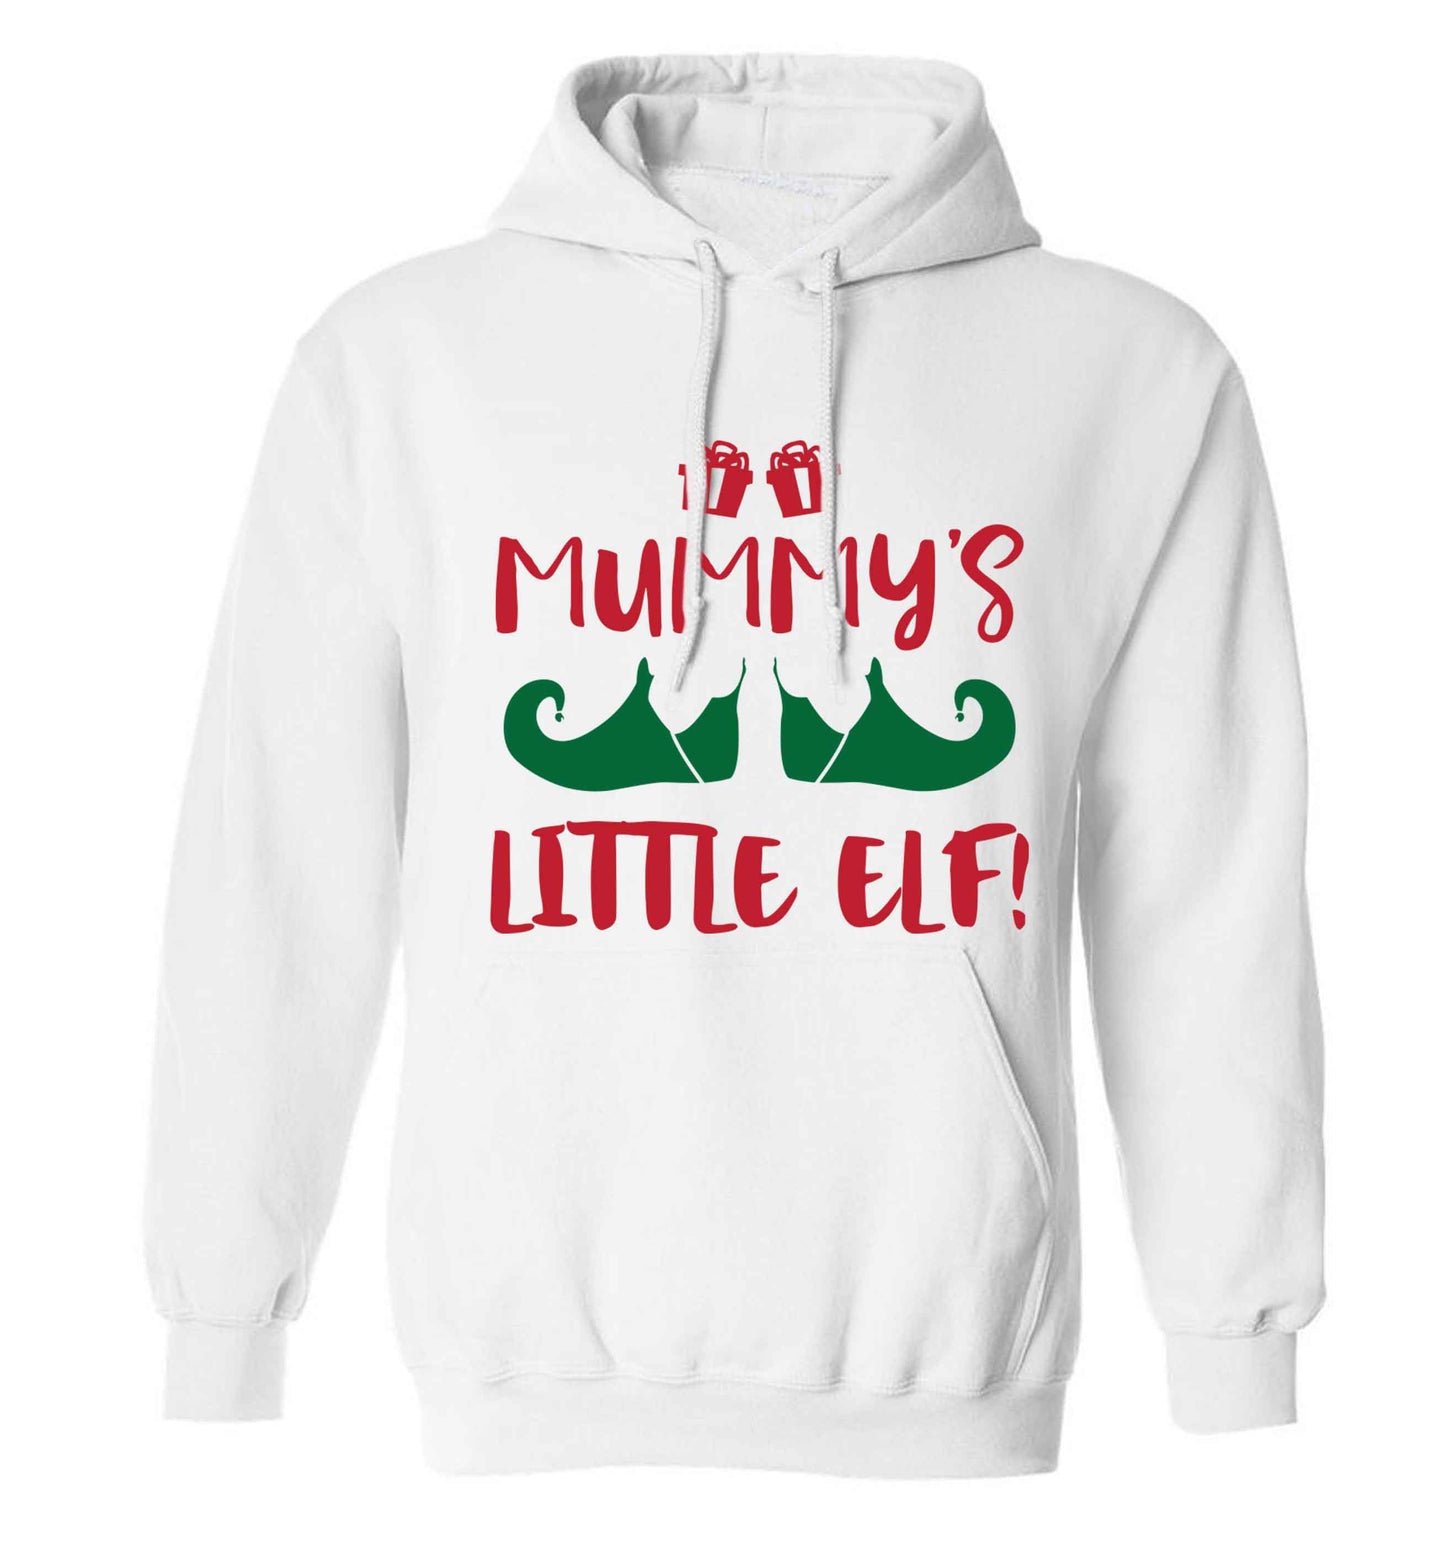 Mummy's little elf adults unisex white hoodie 2XL